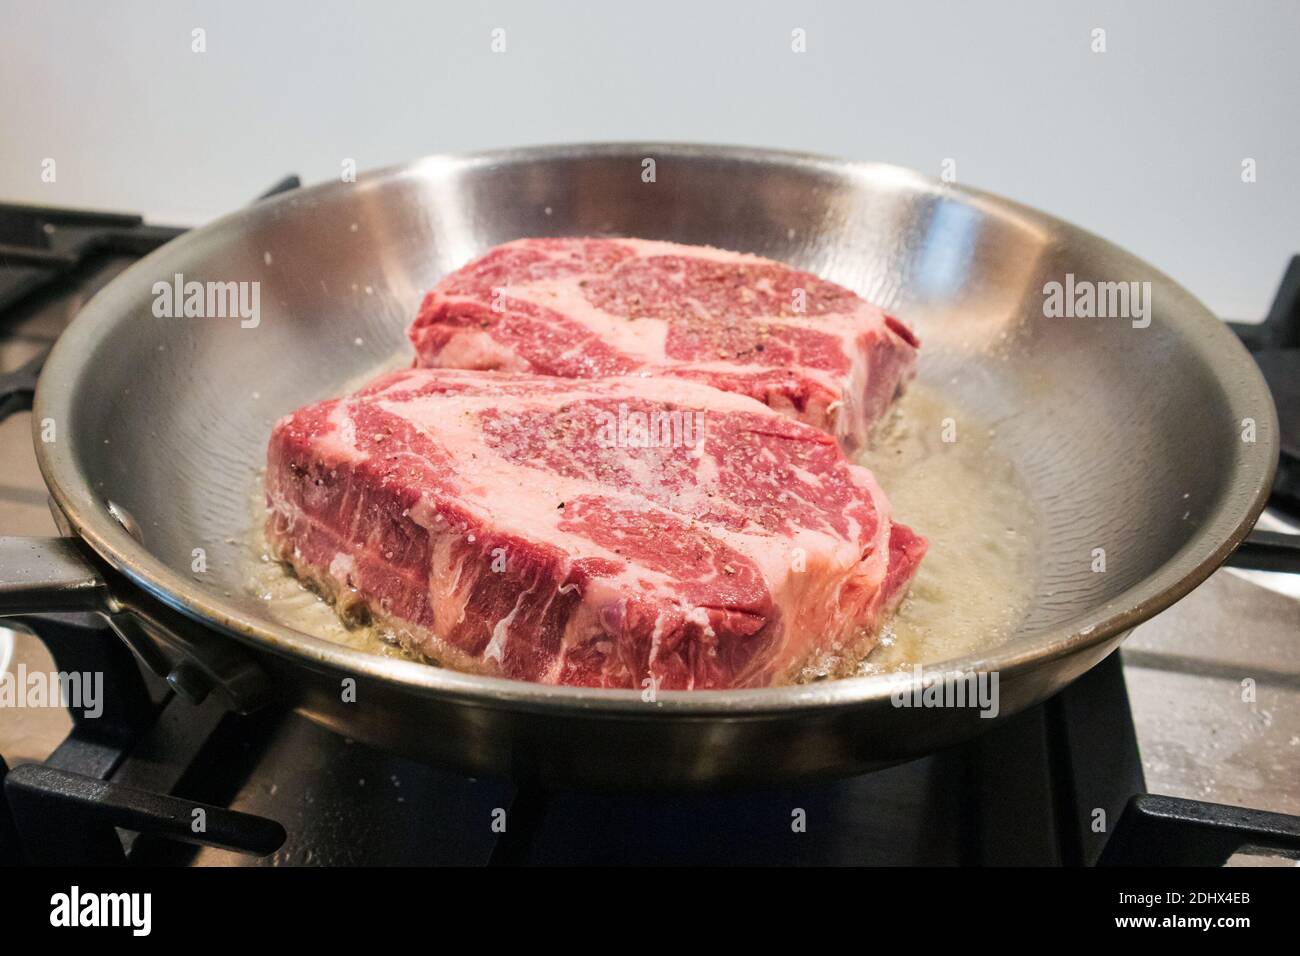 Ribeye beef steak in a pan. Ketogenic or carnivore diet. Stock Photo